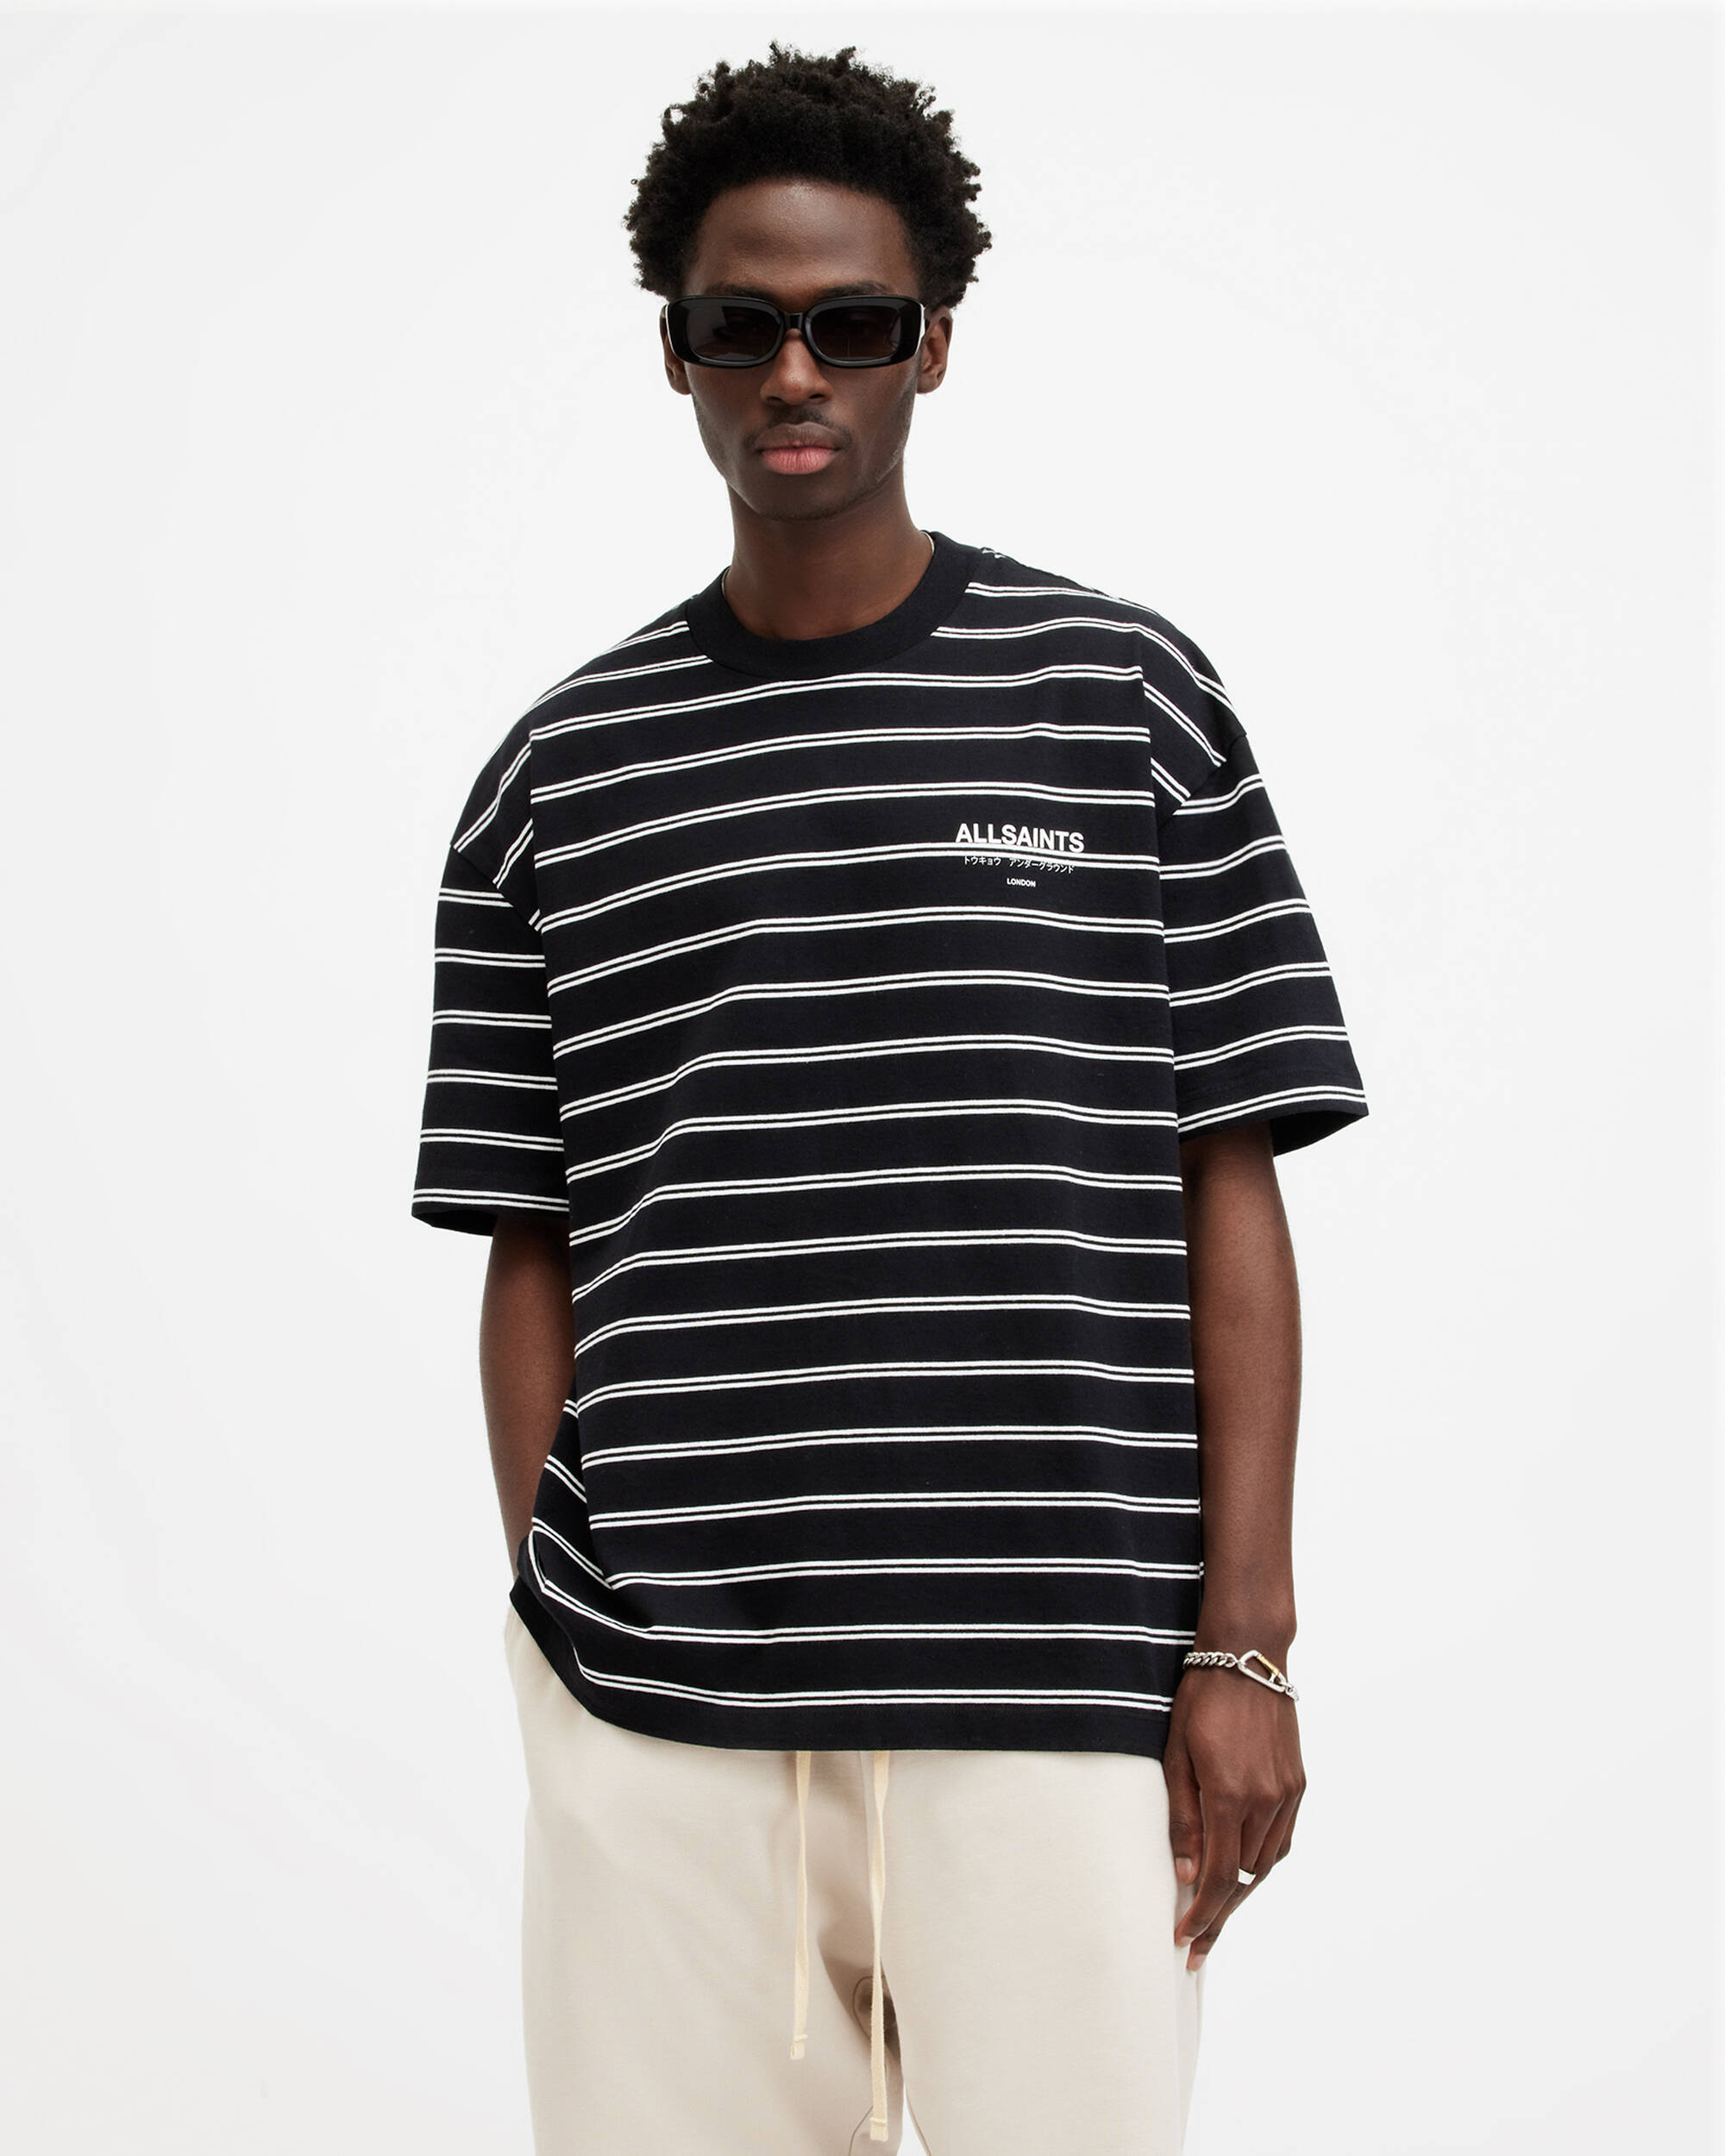 Underground Oversized Striped T-Shirt JET BLK/CHALK WHTE | ALLSAINTS US